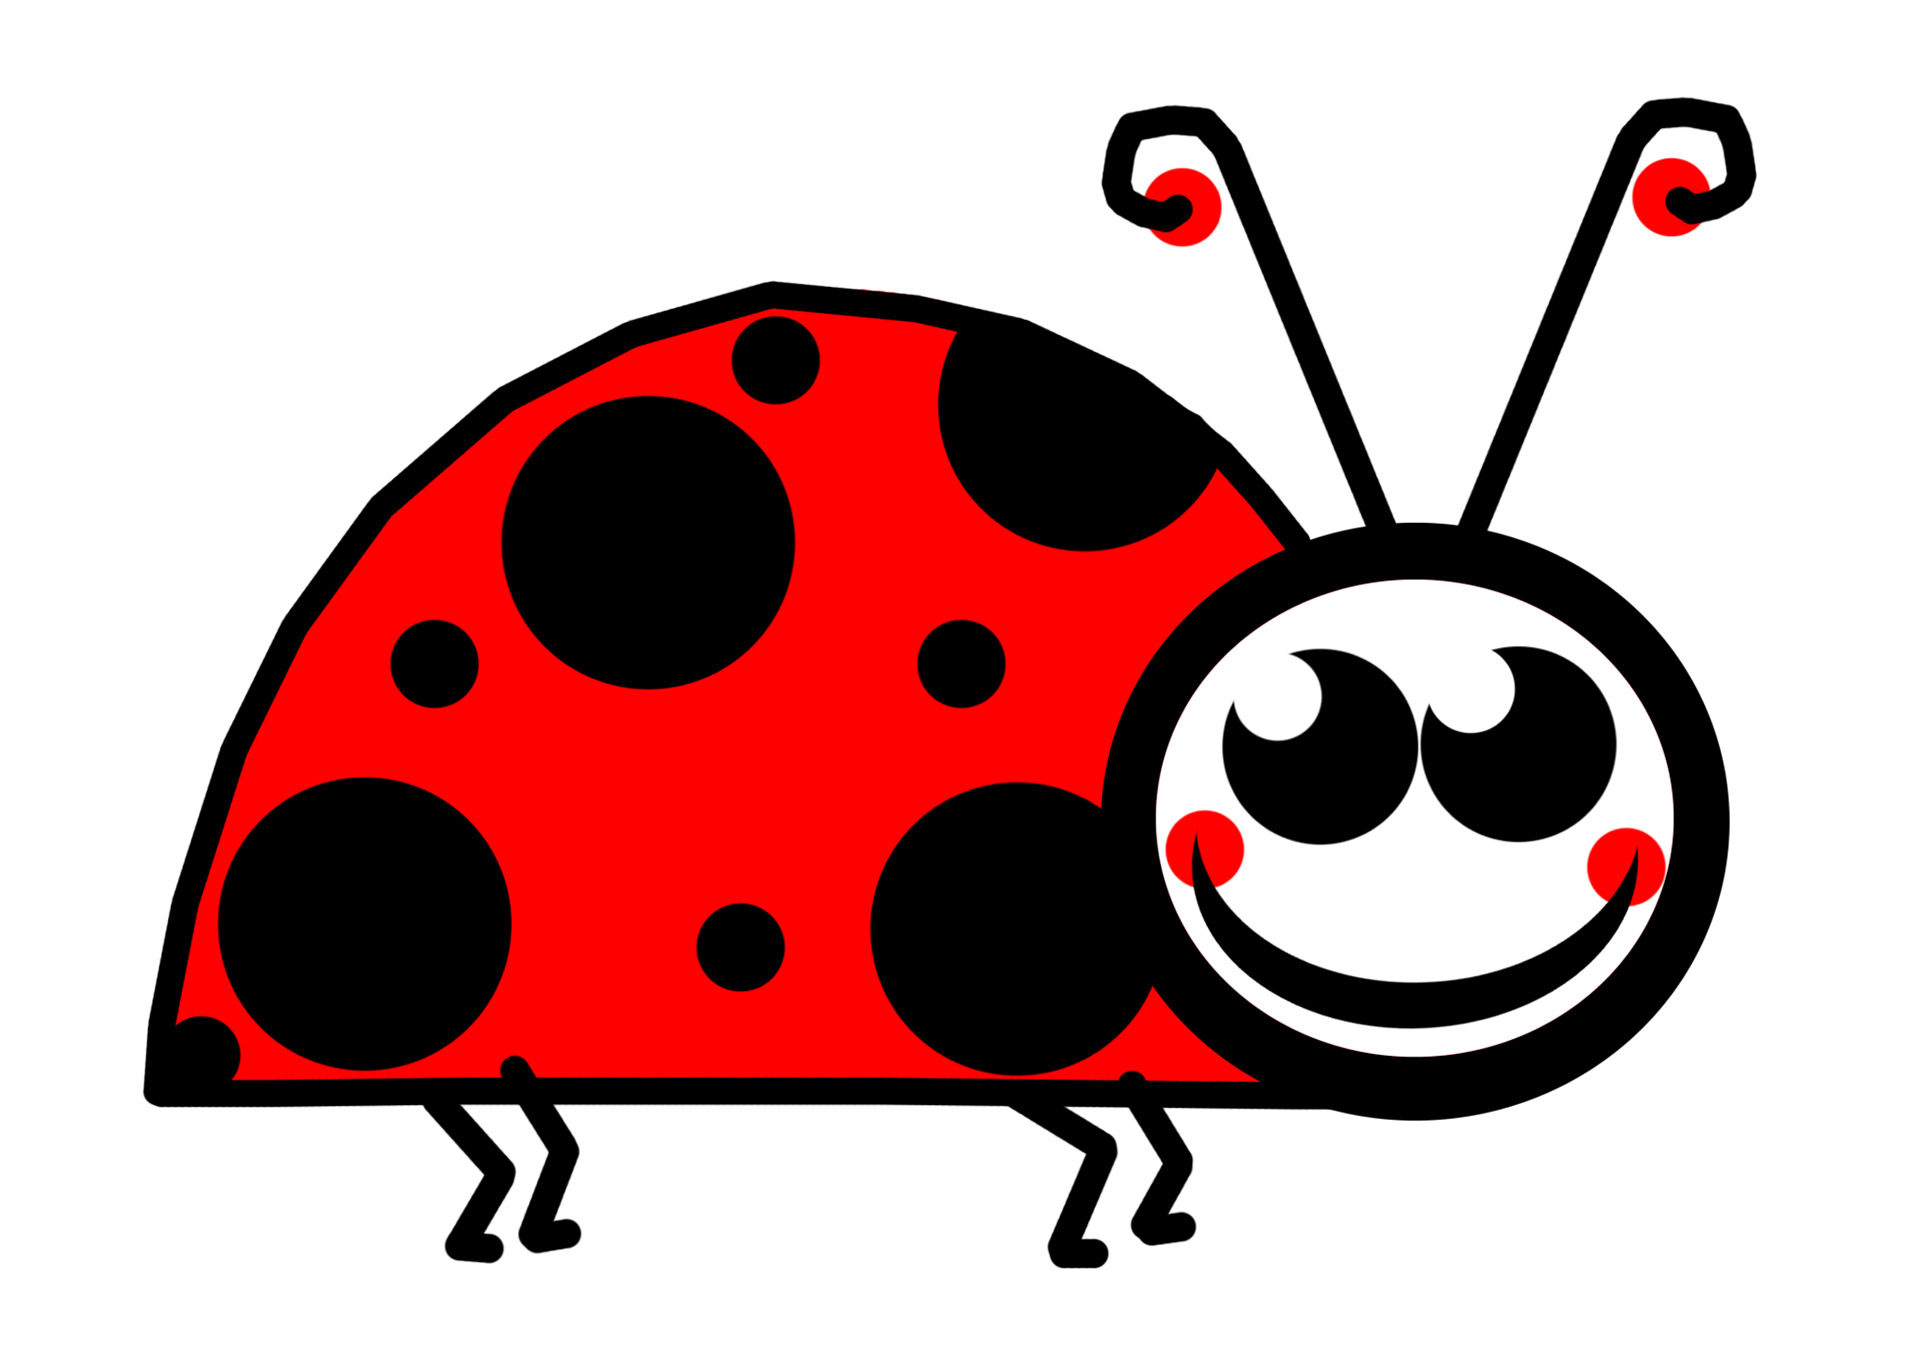 Lady Bug Clip Art - Ladybug Images Clip Art